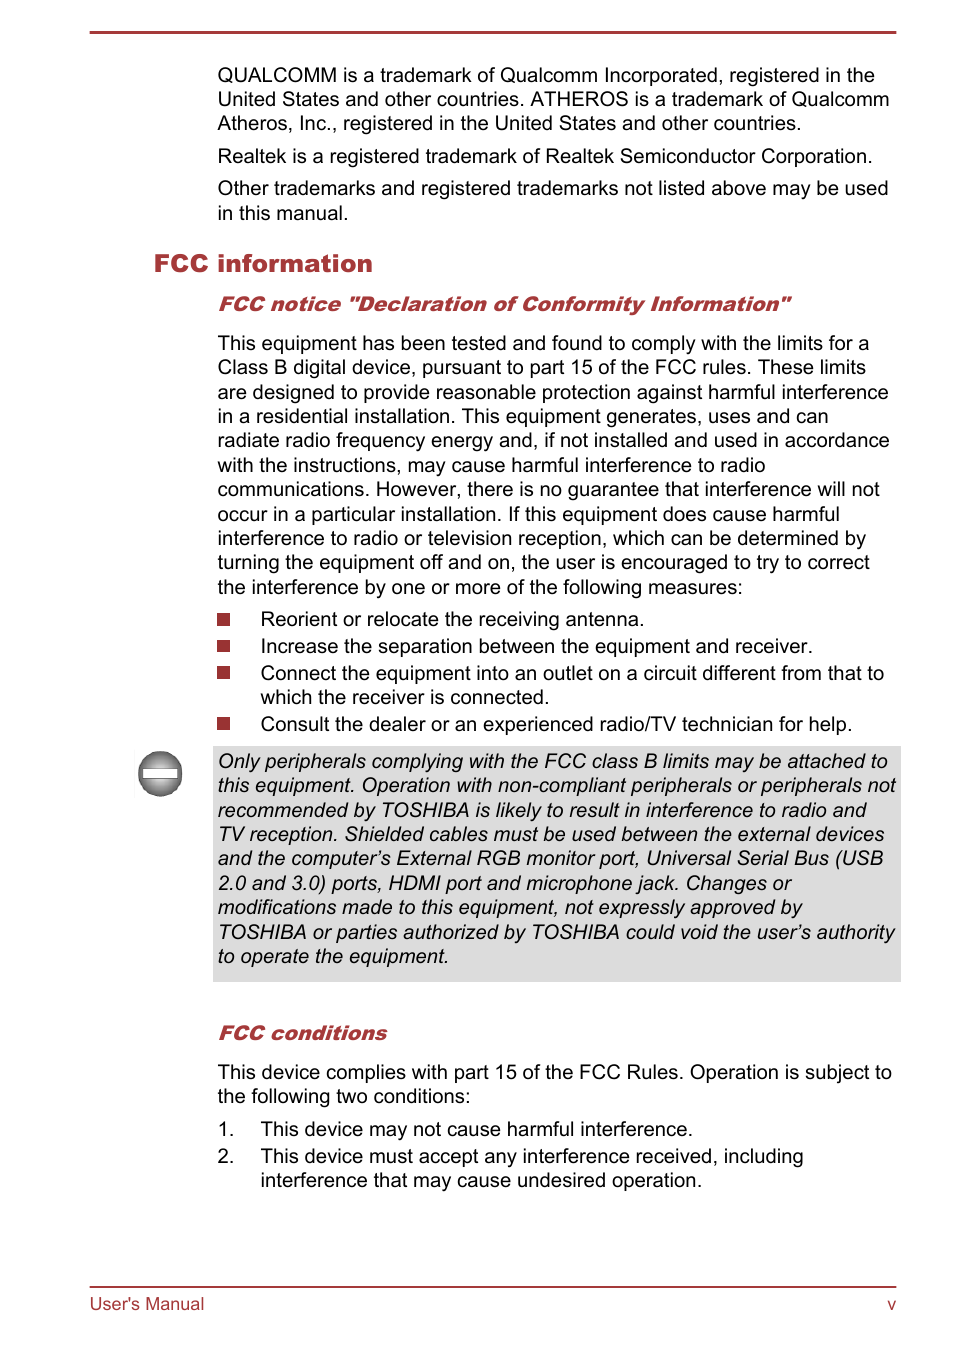 Fcc information | Toshiba Satellite U840 User Manual | Page 5 / 115